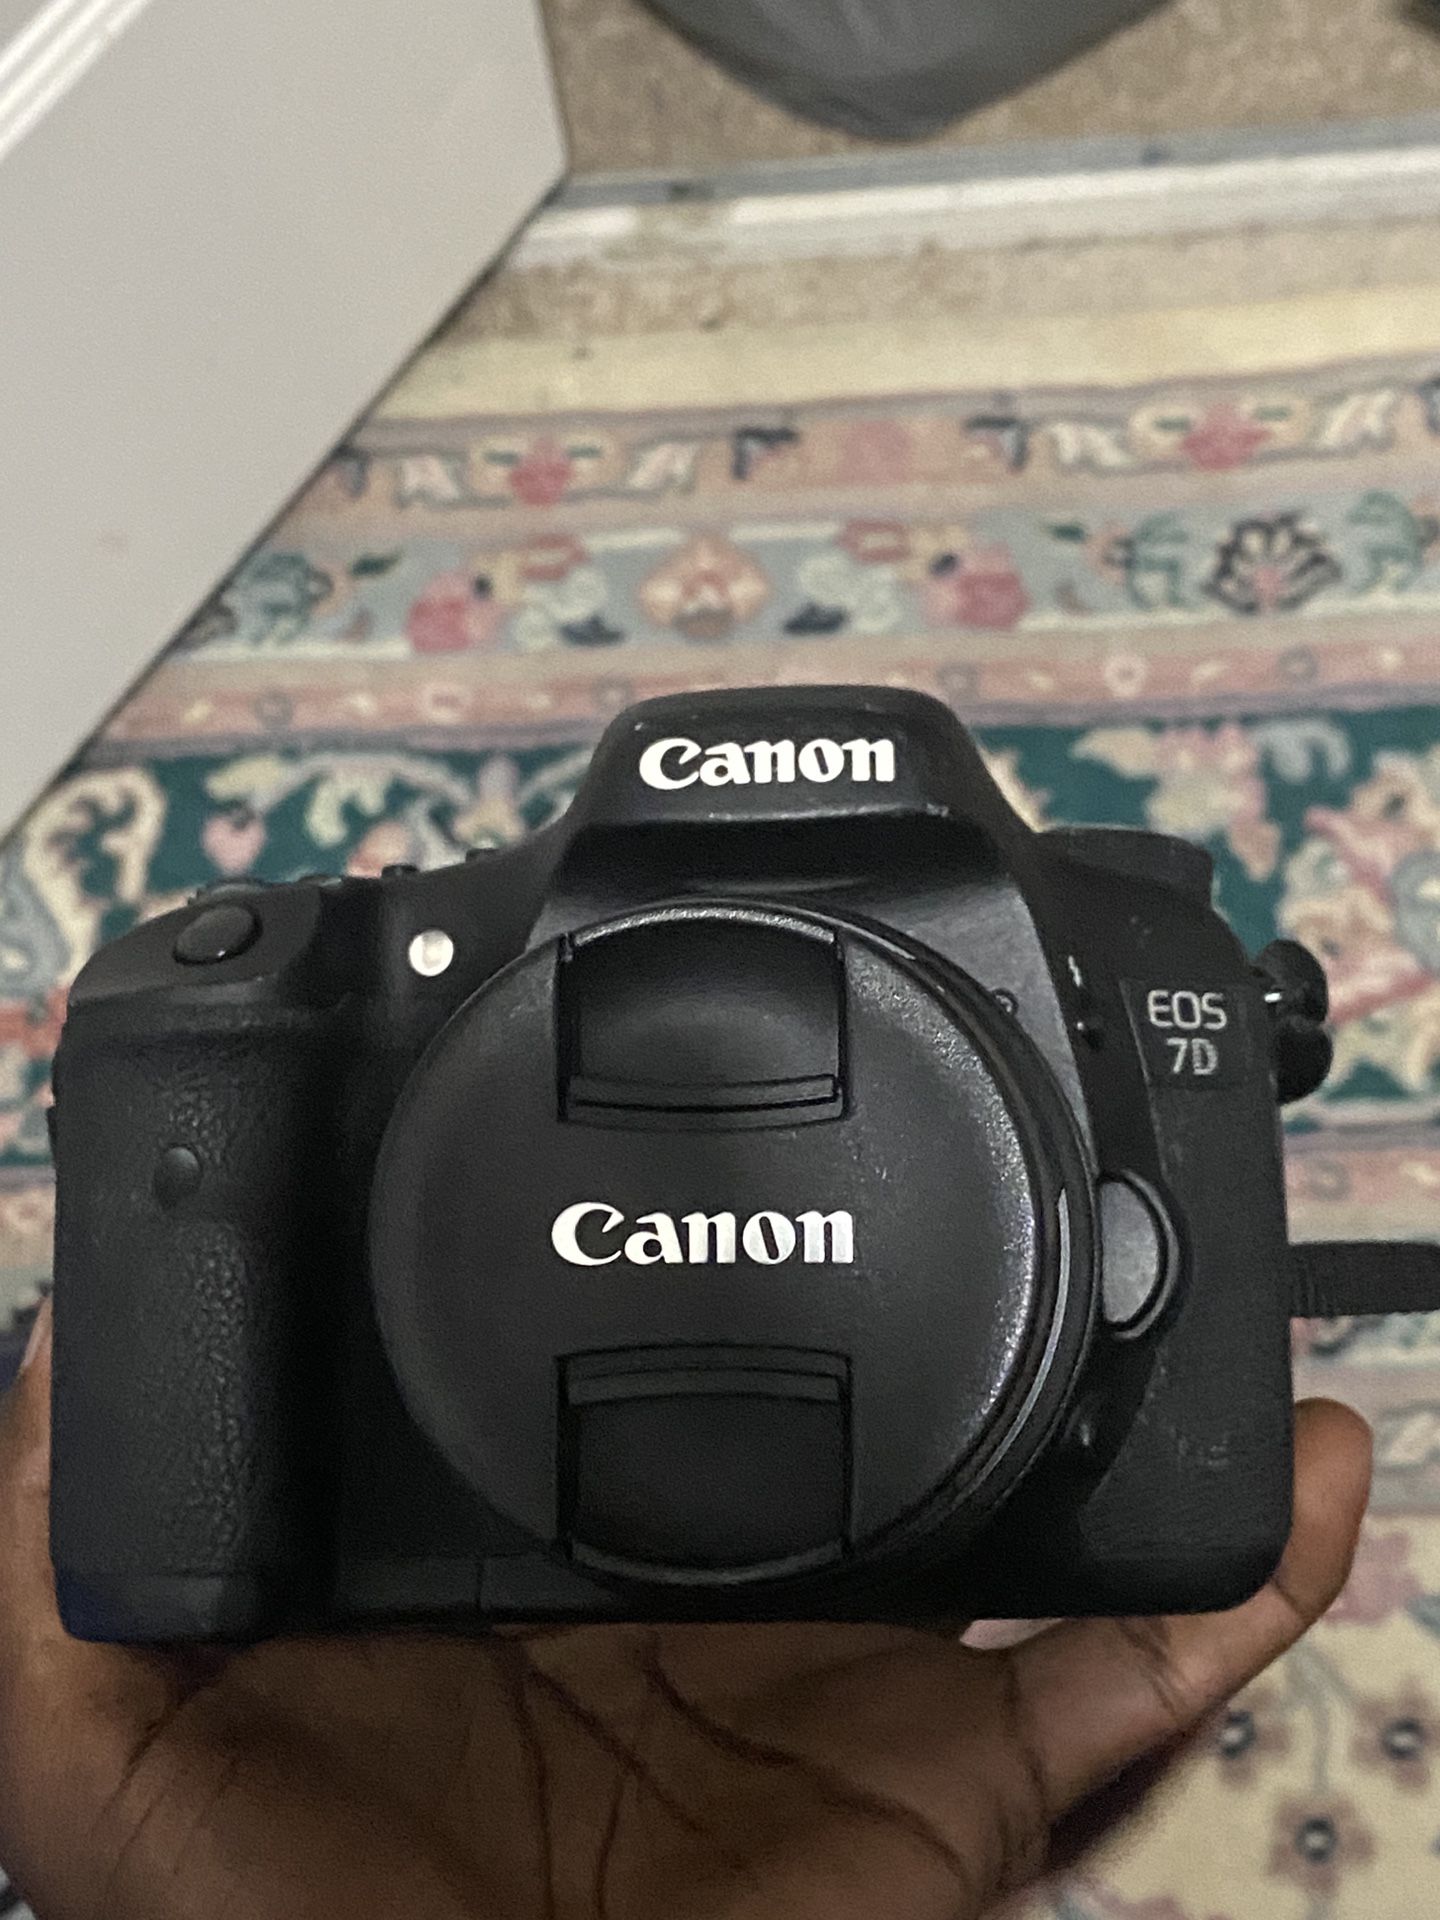 Canon 7D waterproof camera